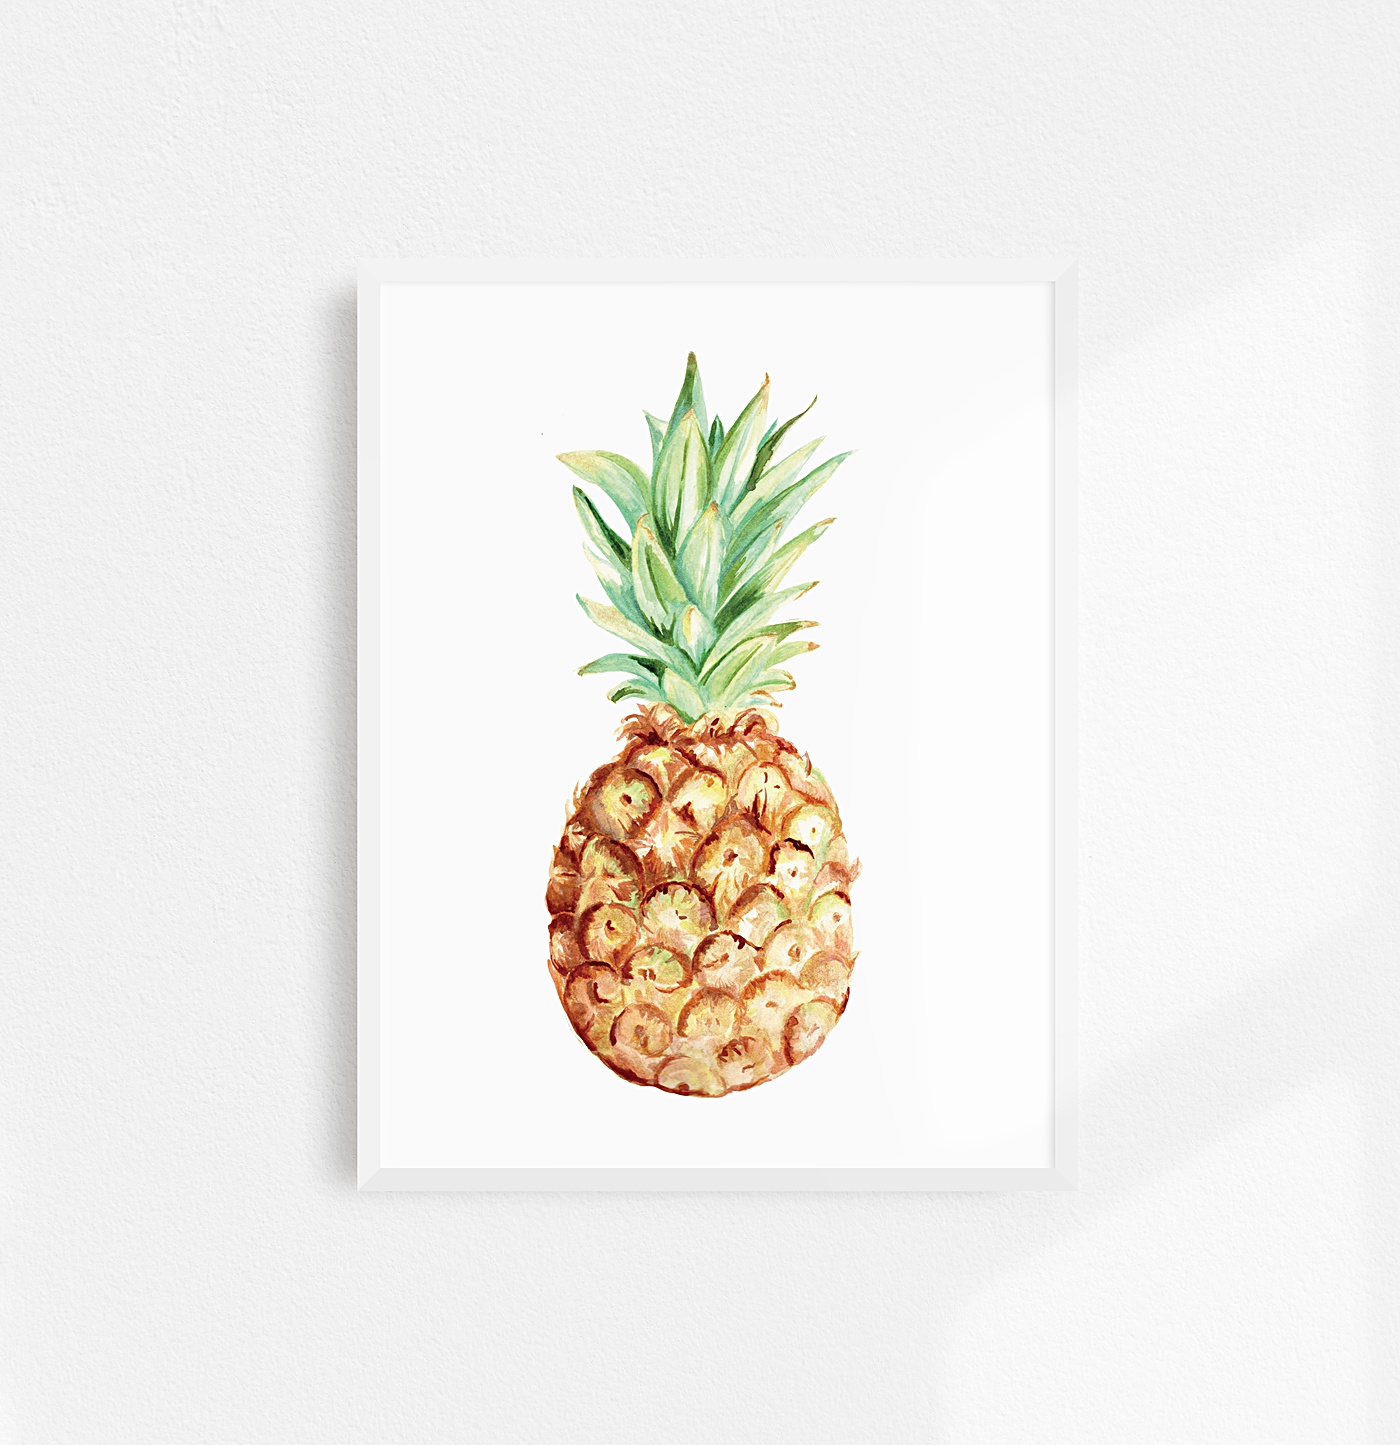 https://emilybaird.com/wp-content/uploads/2020/06/pineapple2noplants.jpg